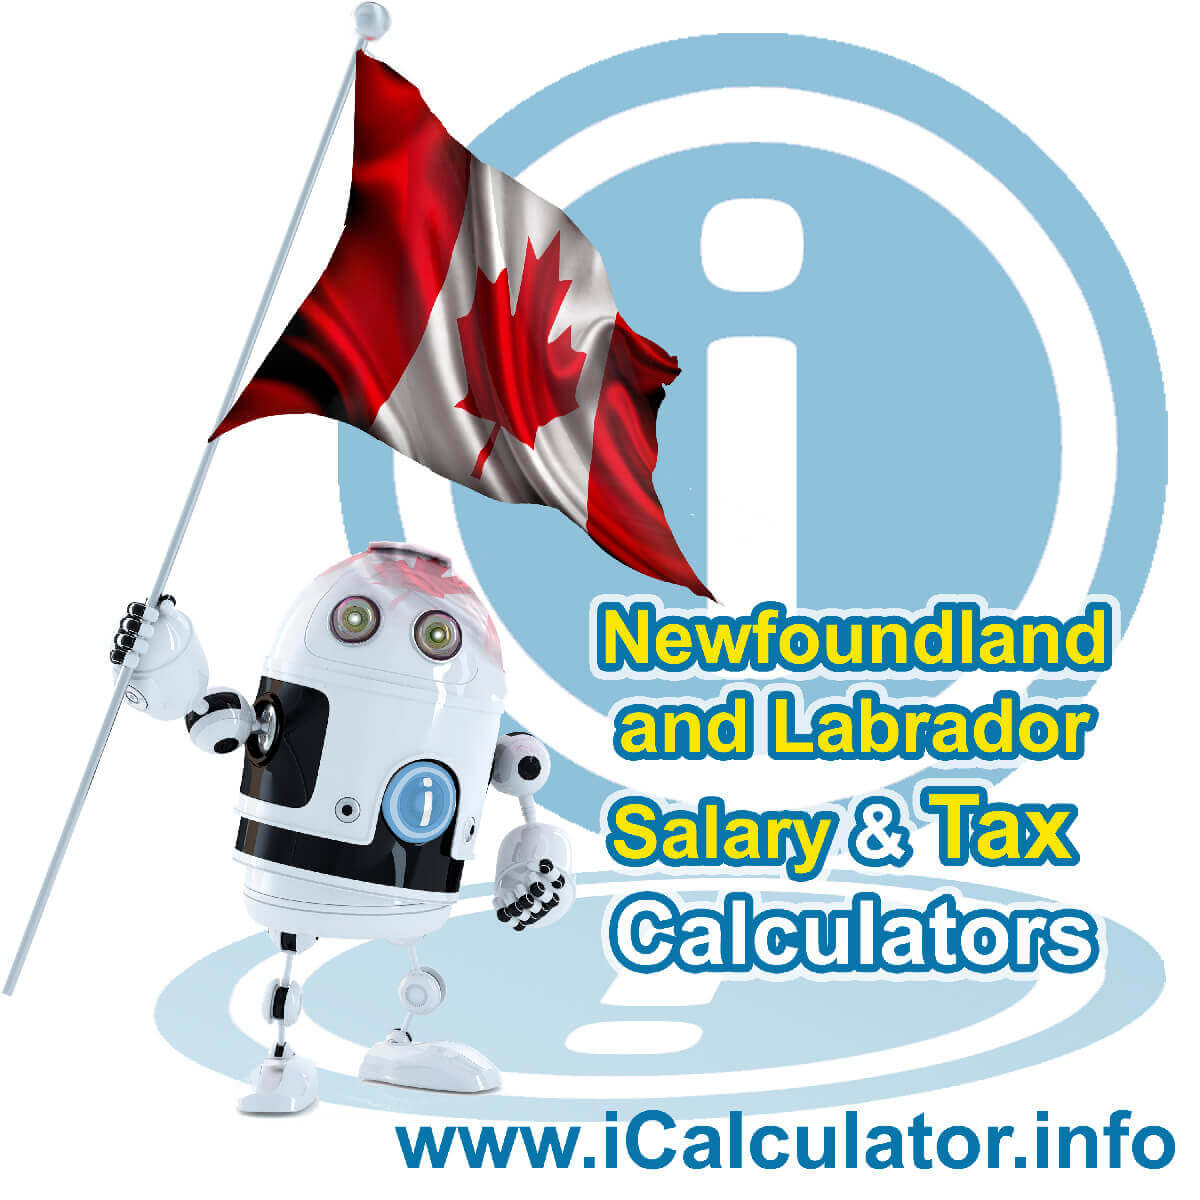 Newfoundland and Labrador 2022 Salary Comparison Calculator. This image shows the Newfoundland and Labrador flag and information relating to the tax formula used in the Newfoundland and Labrador 2022 Salary Comparison Calculator